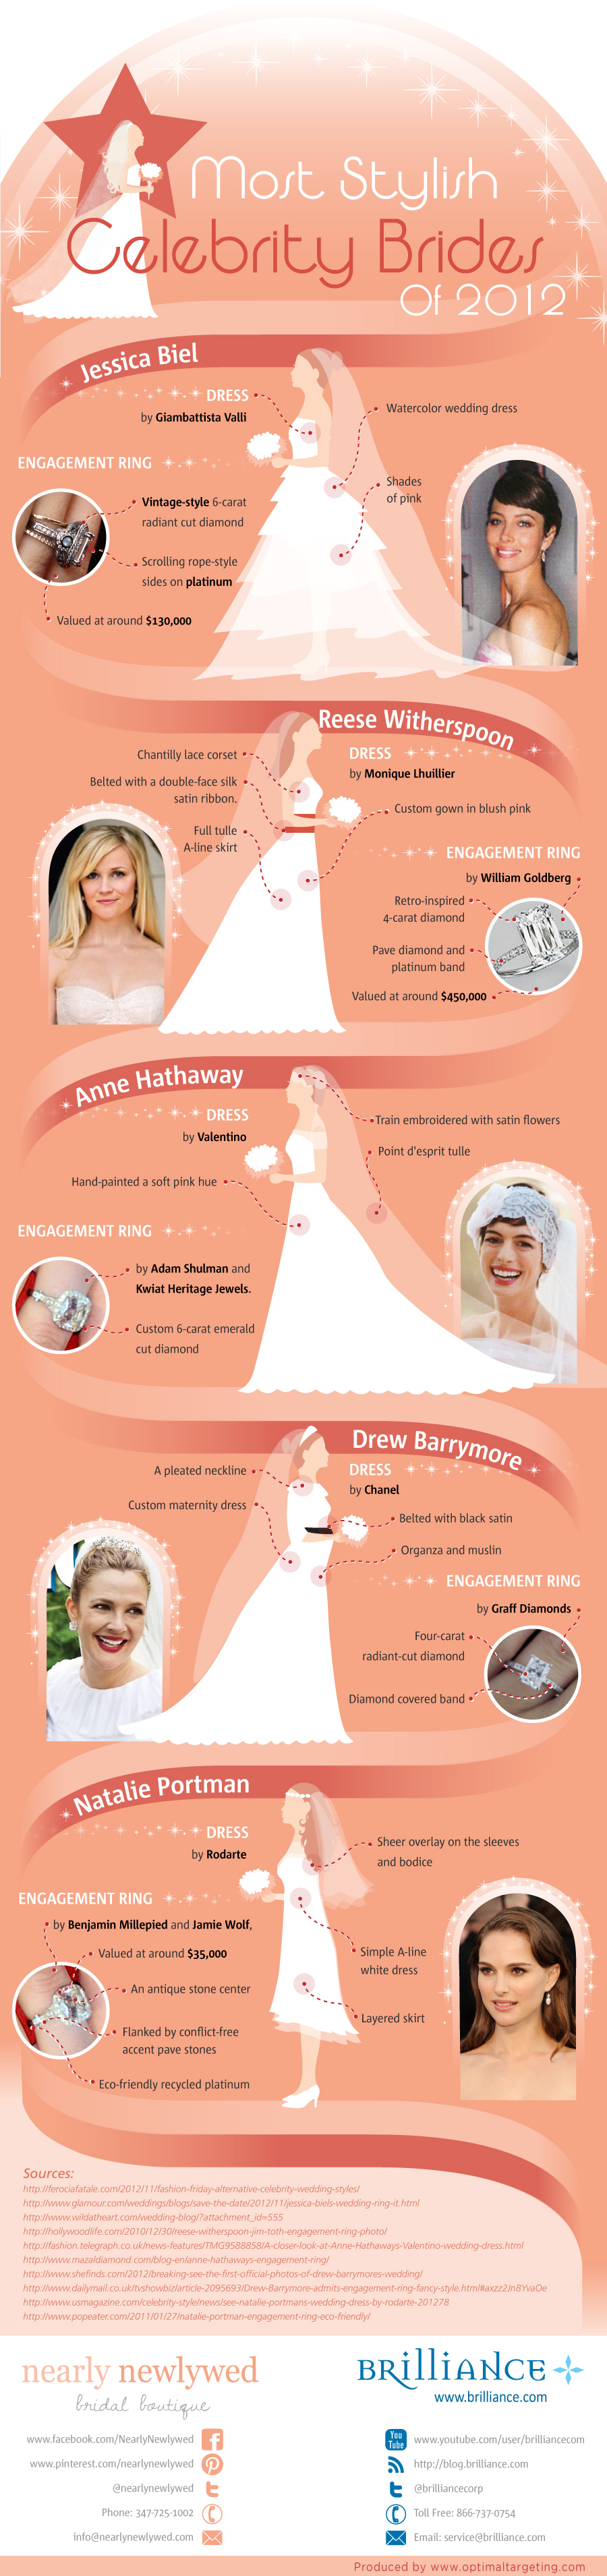 Most Stylish Celebrity Brides